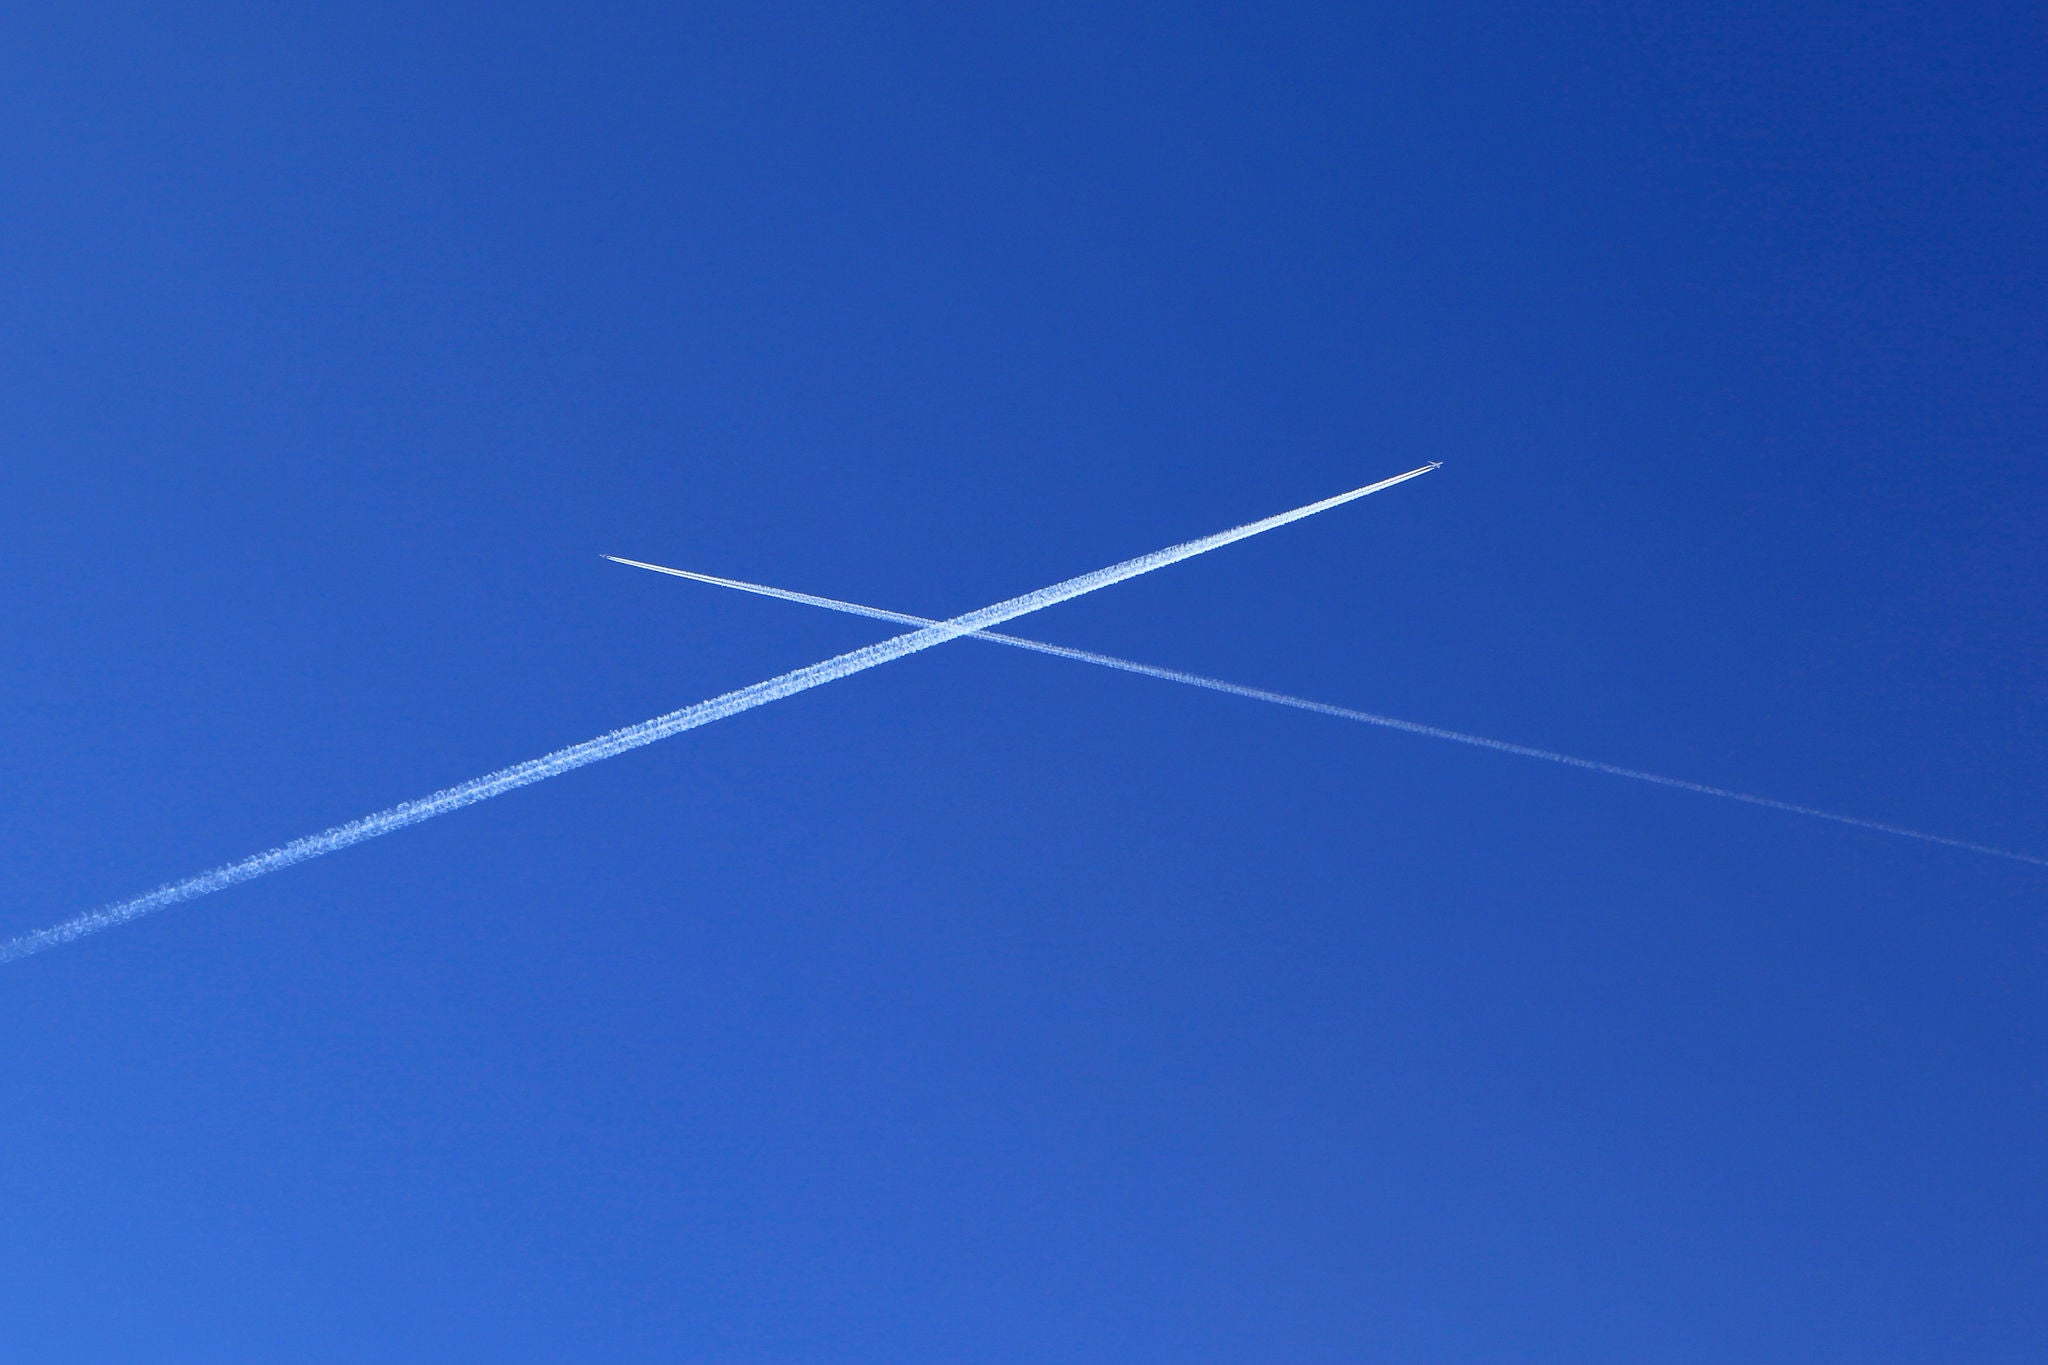 Planes crossing in blue sky